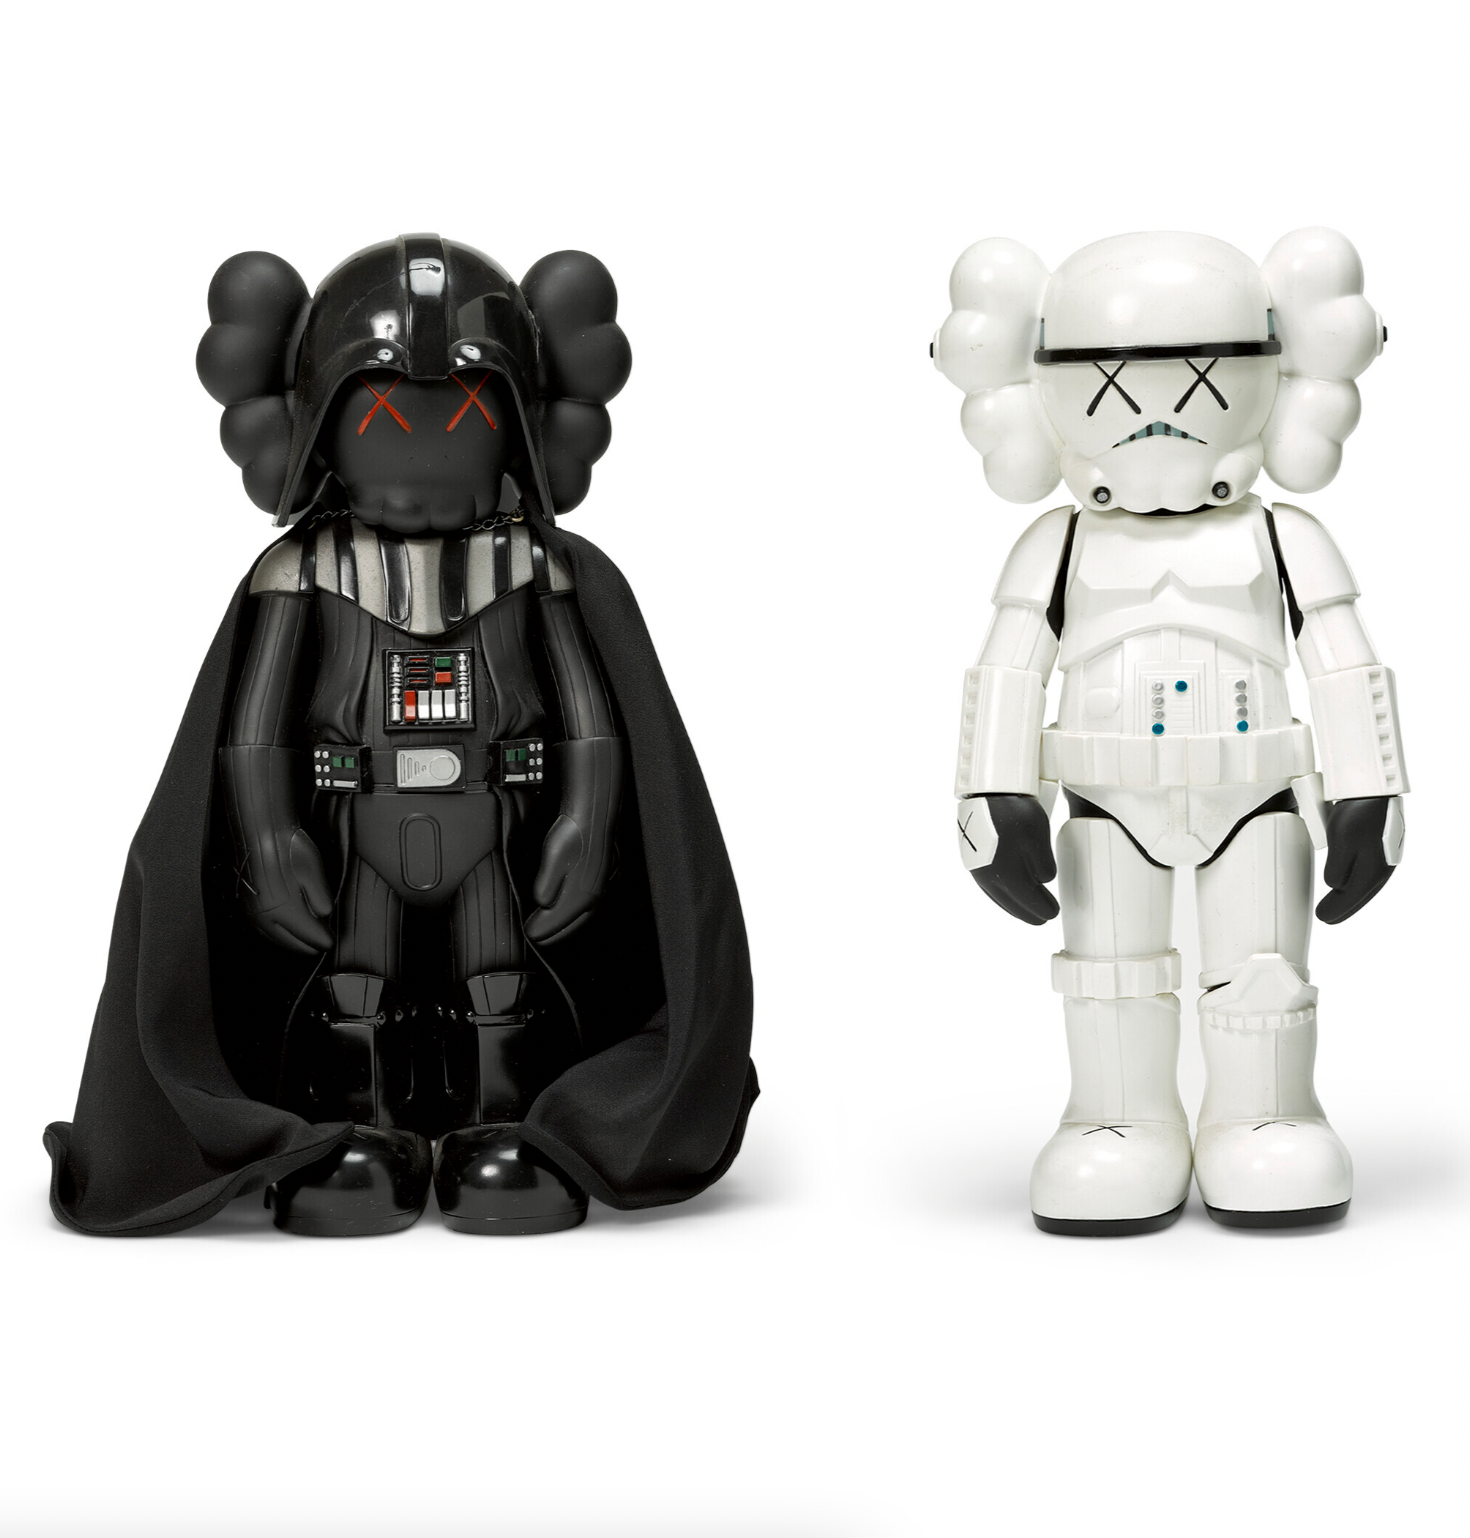 Star Wars Darth Vader Companion & Star Wars Stormtrooper Companion (Set of 2), 2007-2008